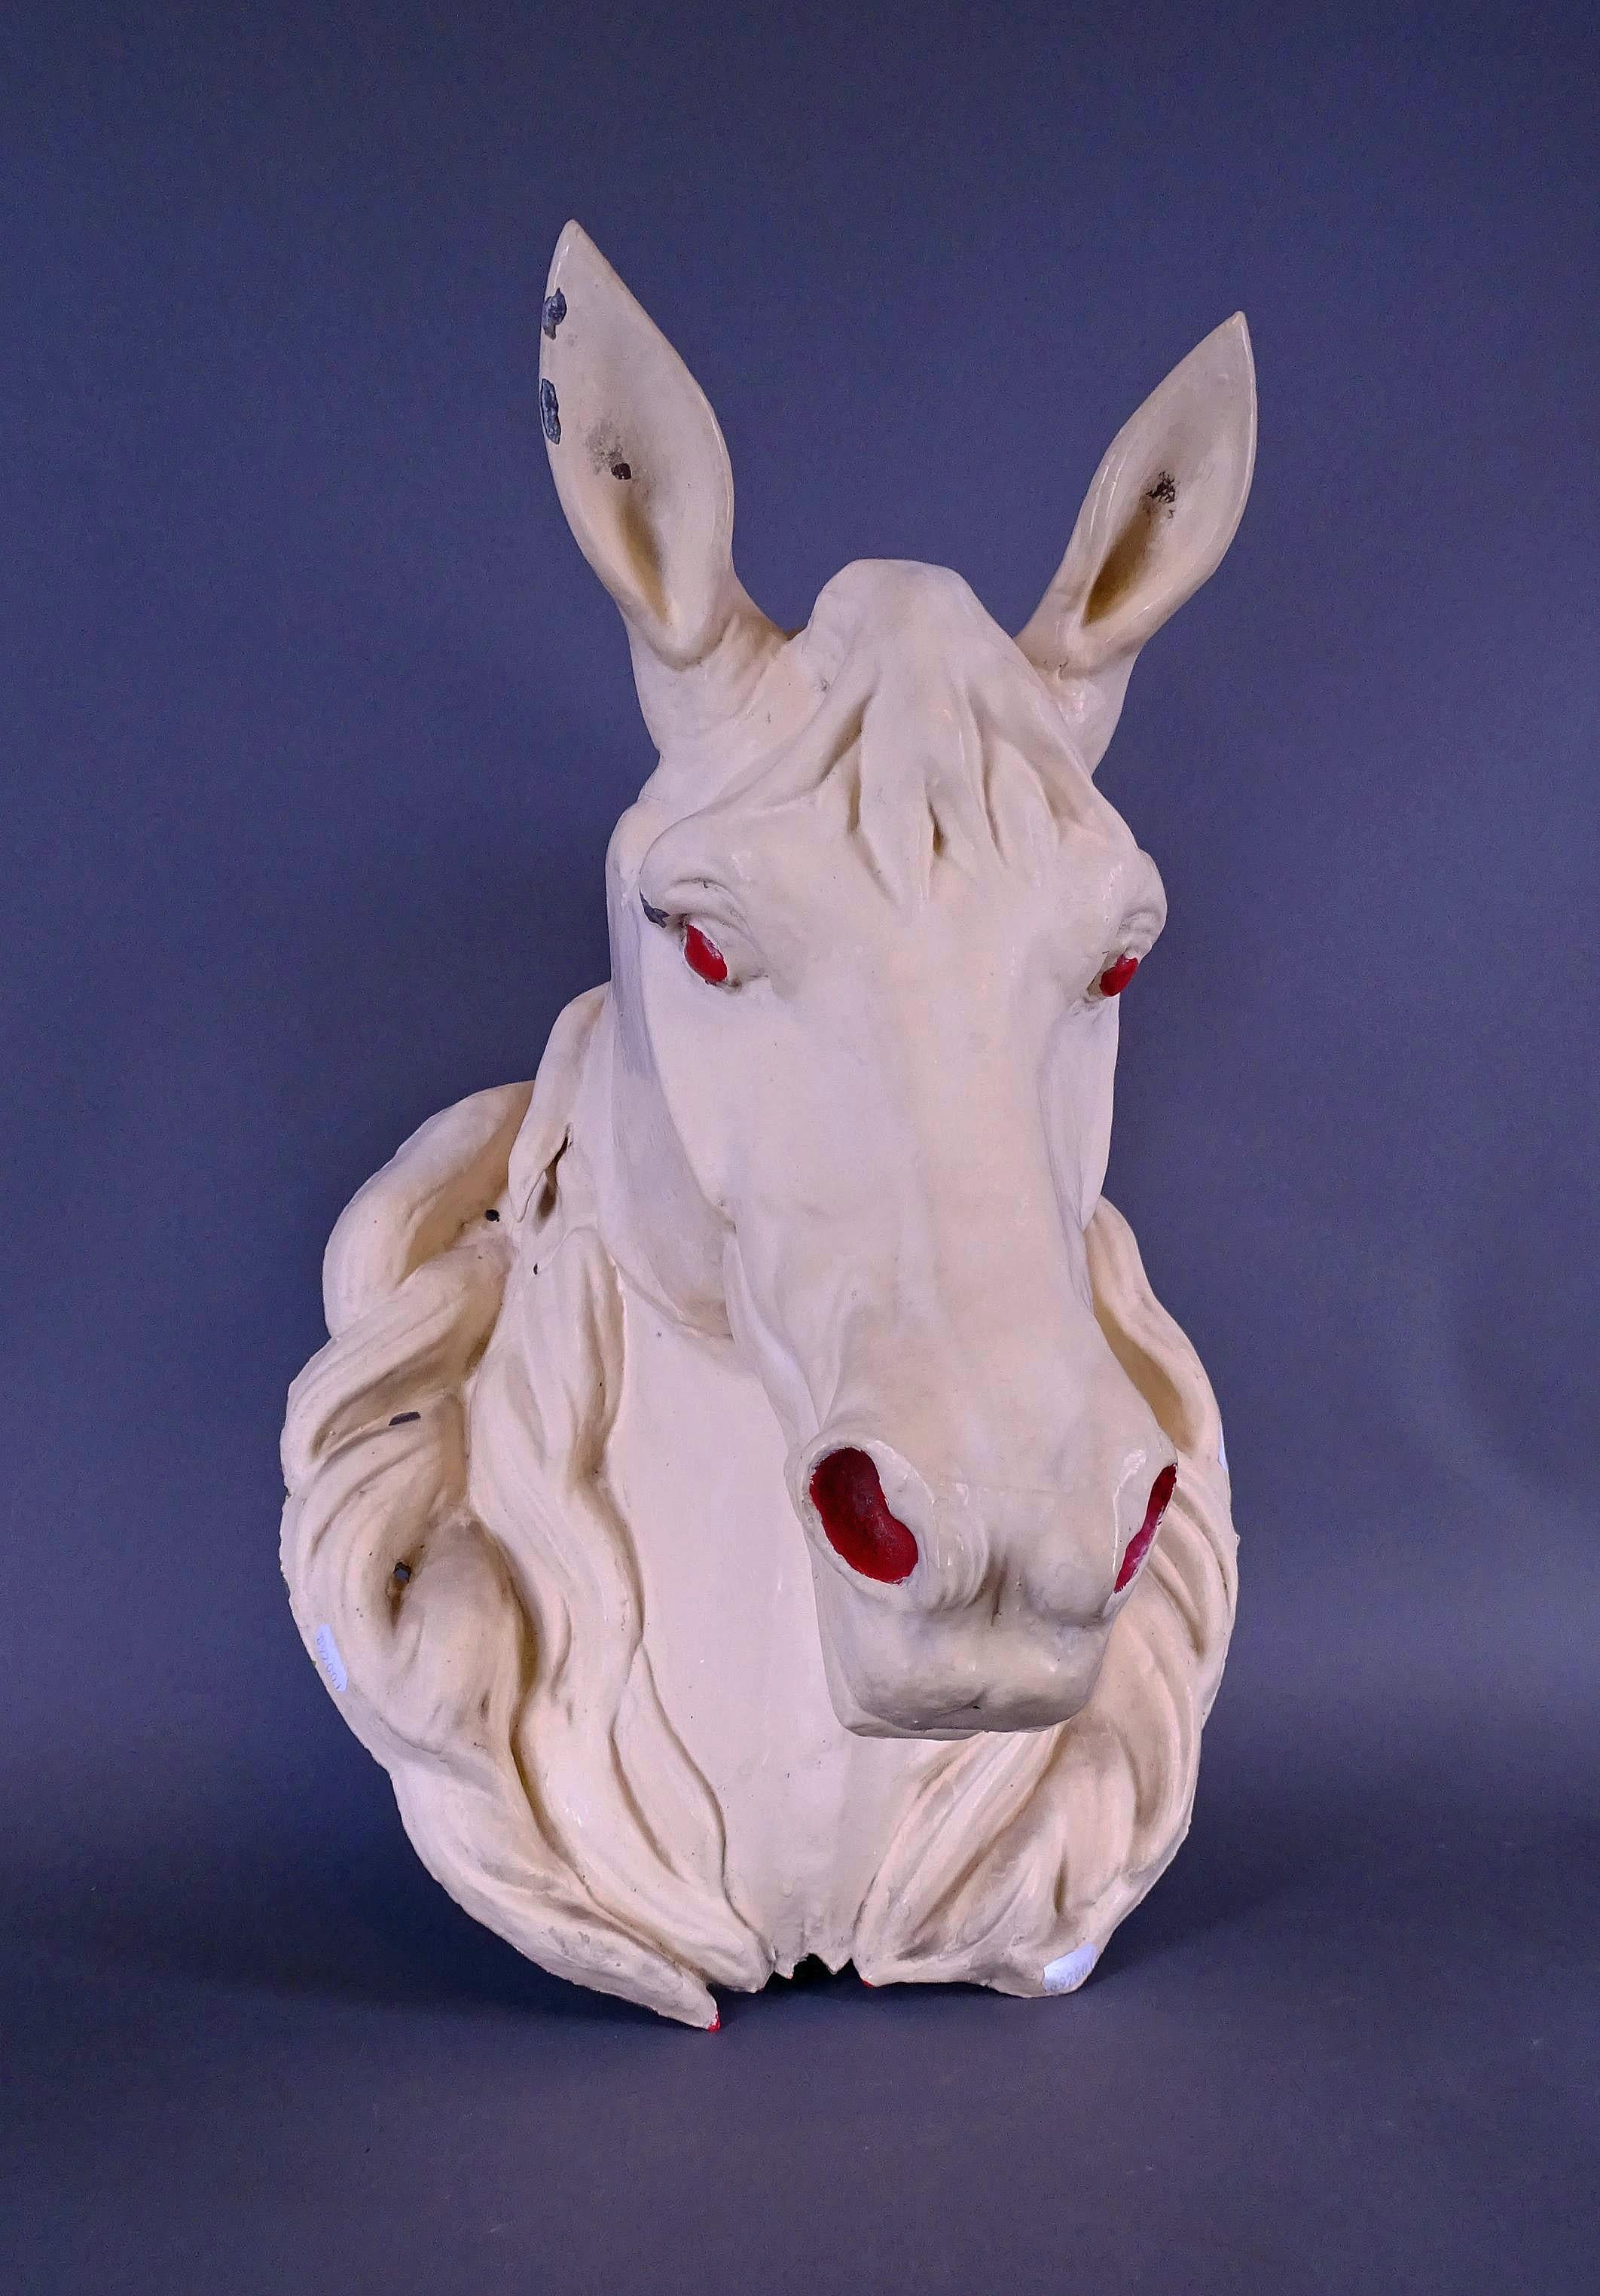 styrofoam horse head